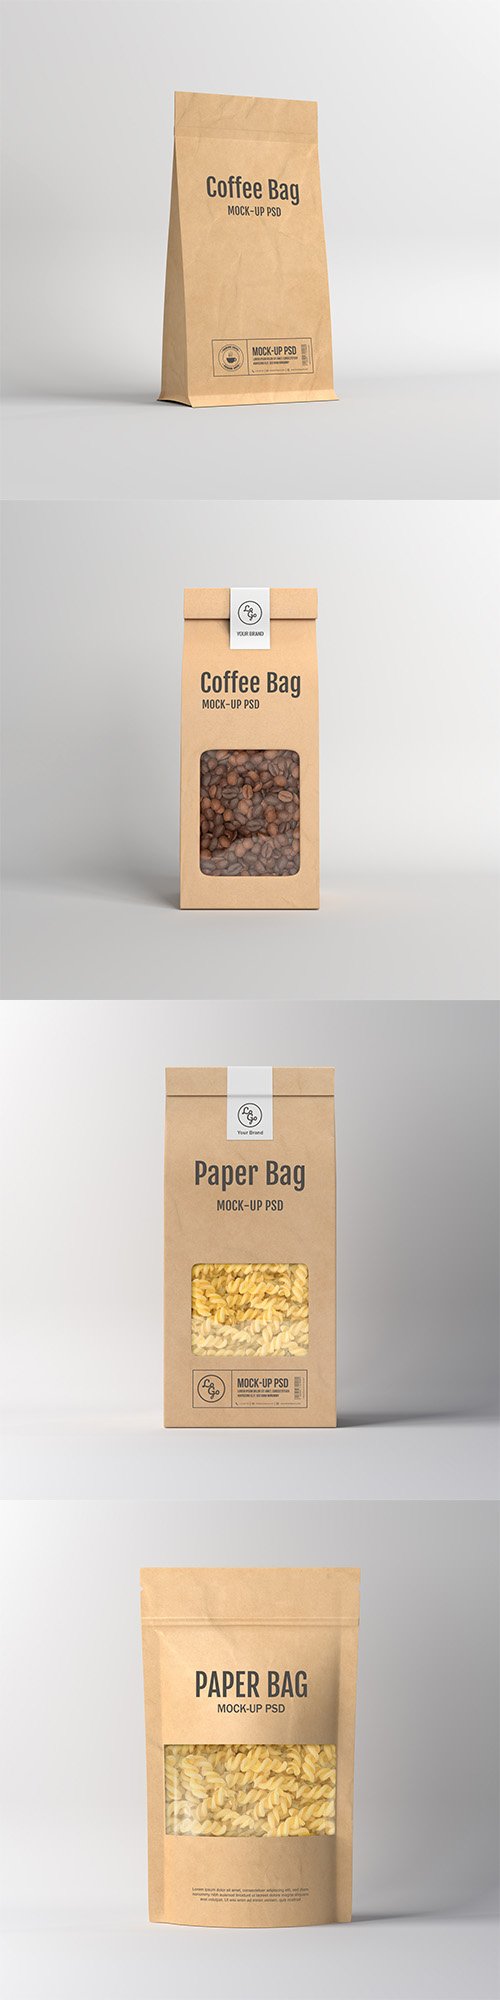 Paper Bag Packaging Mockup Set